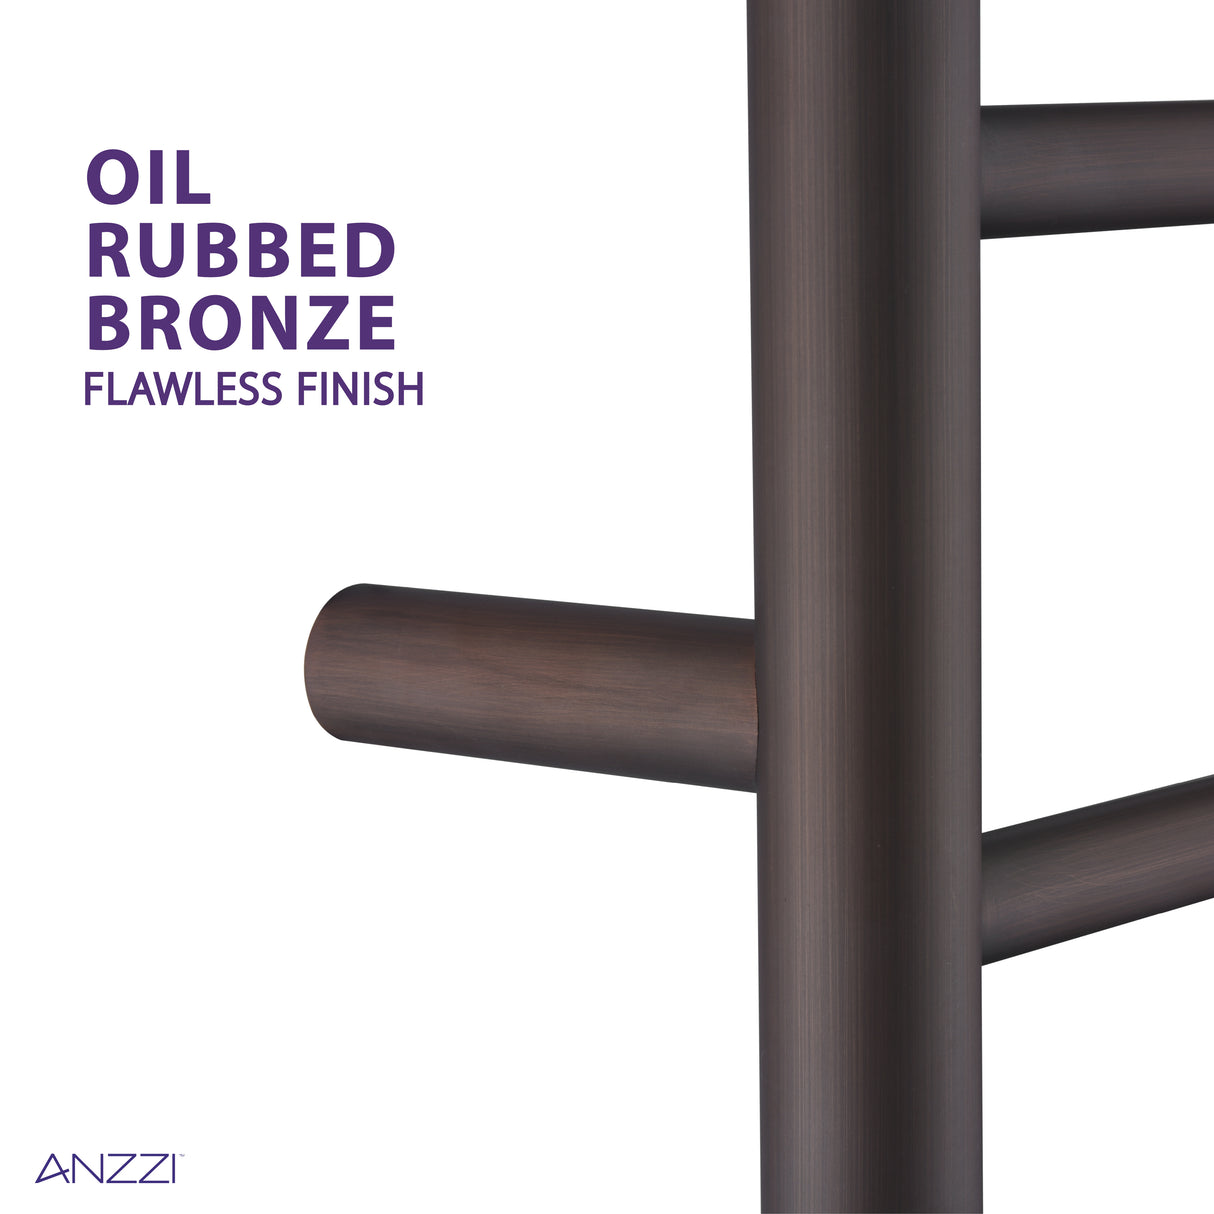 ANZZI TW-AZ018ORB Glow 4-Bar Stainless Steel Wall Mounted Towel Warmer in Oil Rubbed Bronze